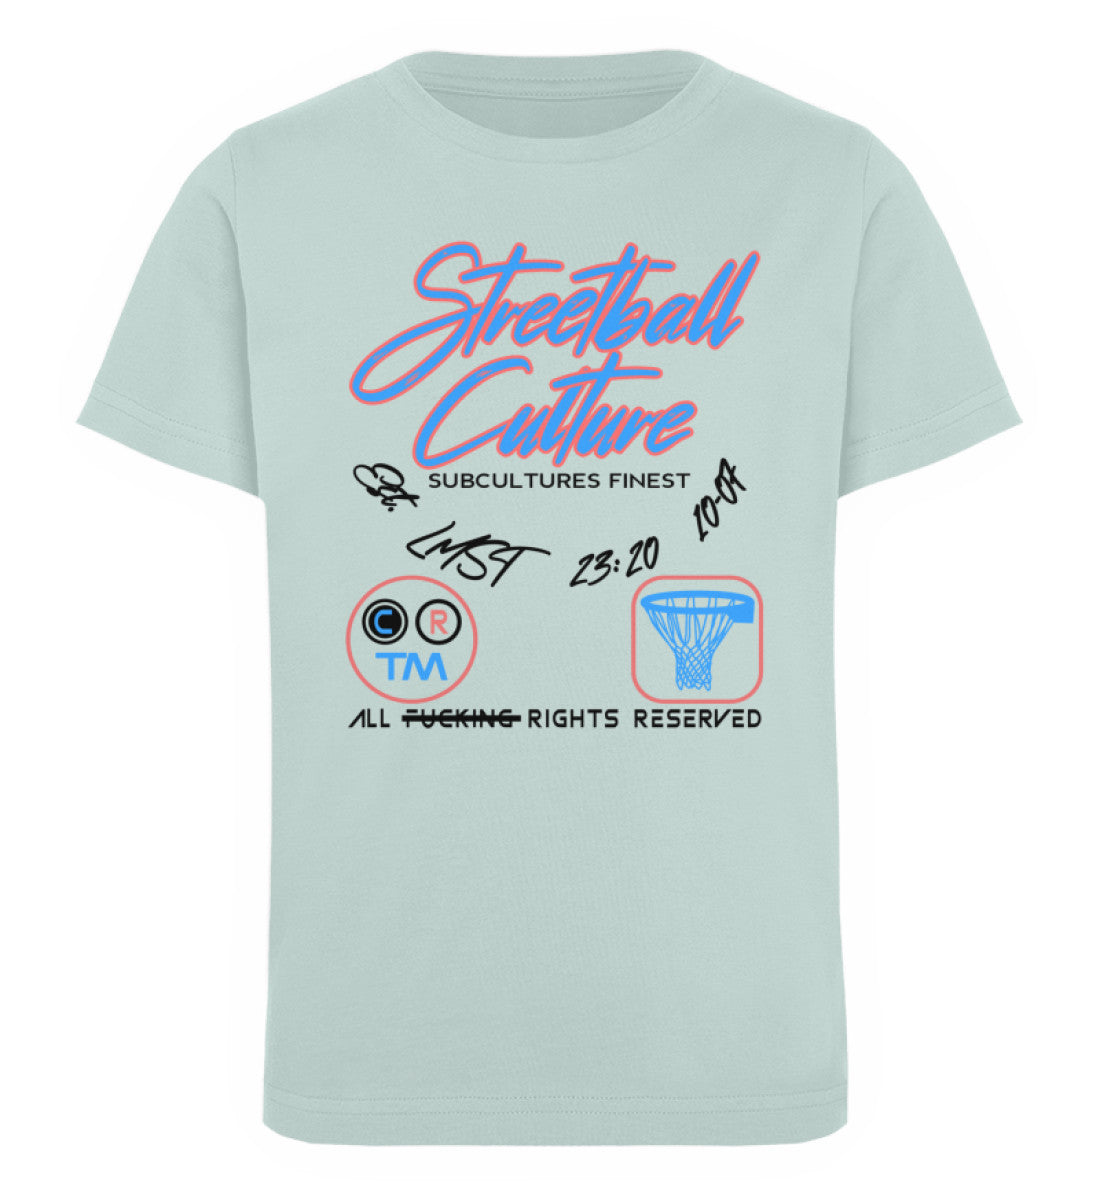 Carribean Blue farbiges Kinder T-Shirt für Mädchen und Jungen bedruckt mit dem Design der Roger Rockawoo Kollektion Basketball Streetball Culture